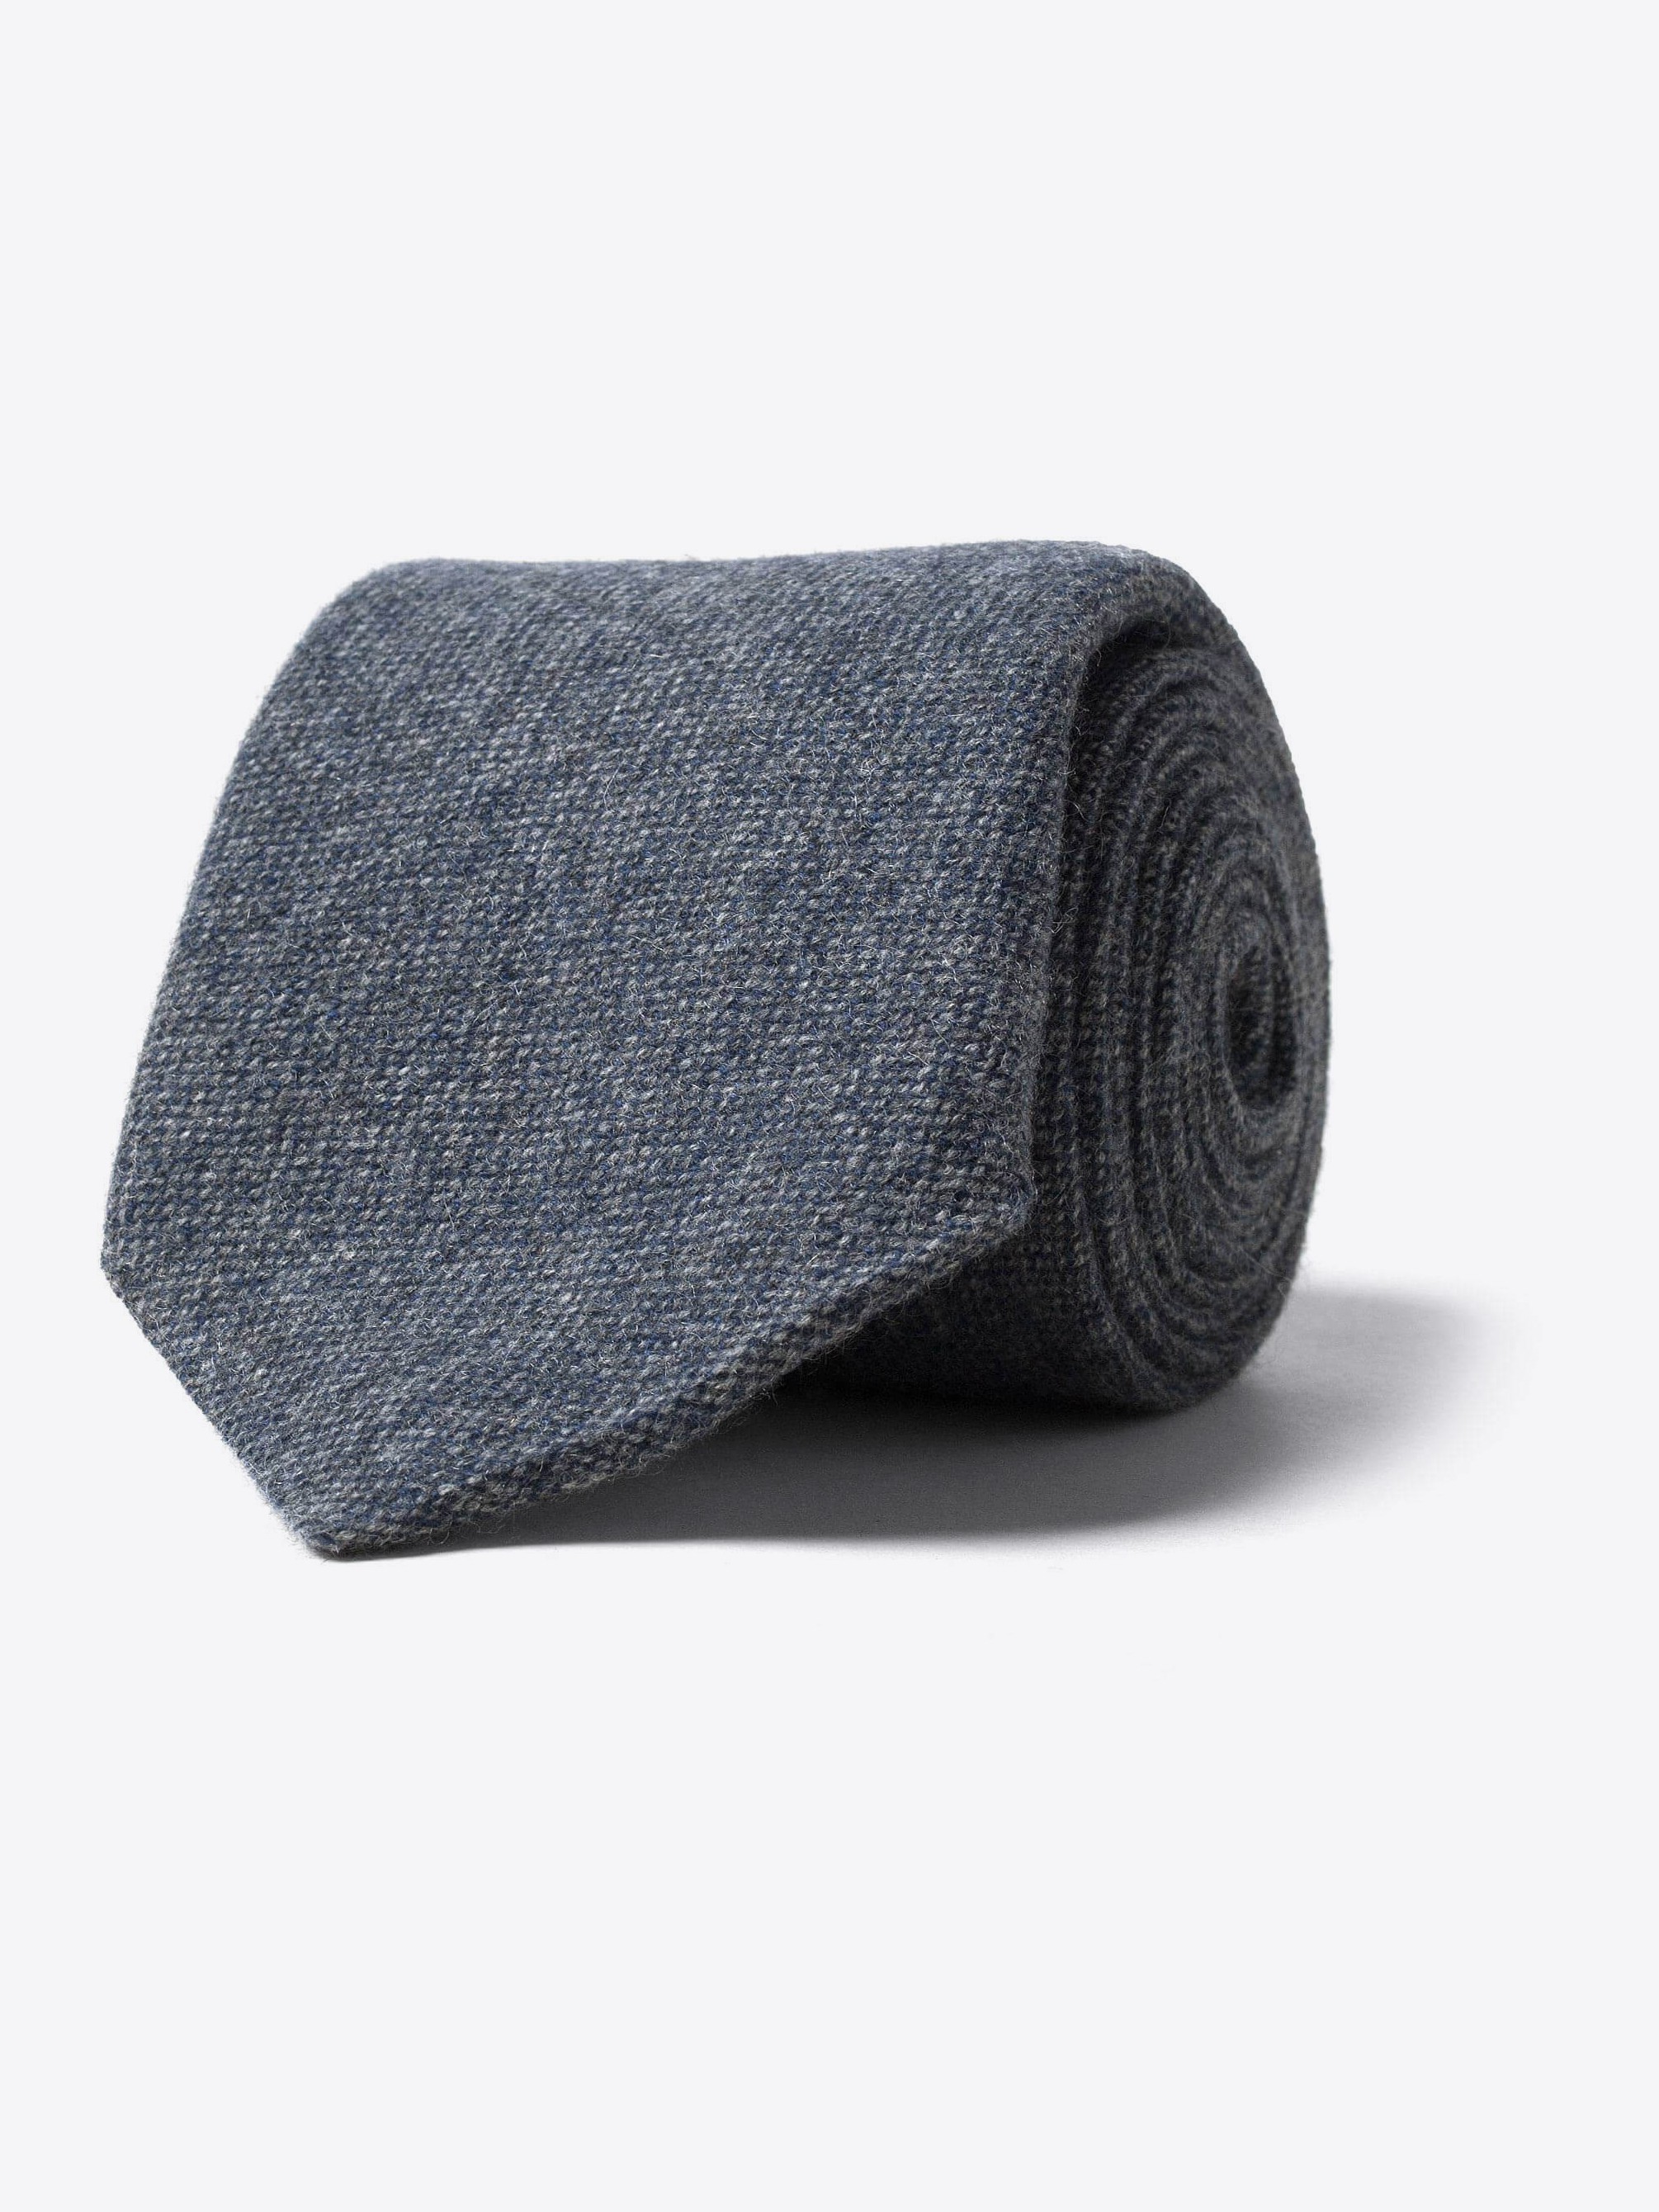 Zoom Image of Slate Cashmere Tie